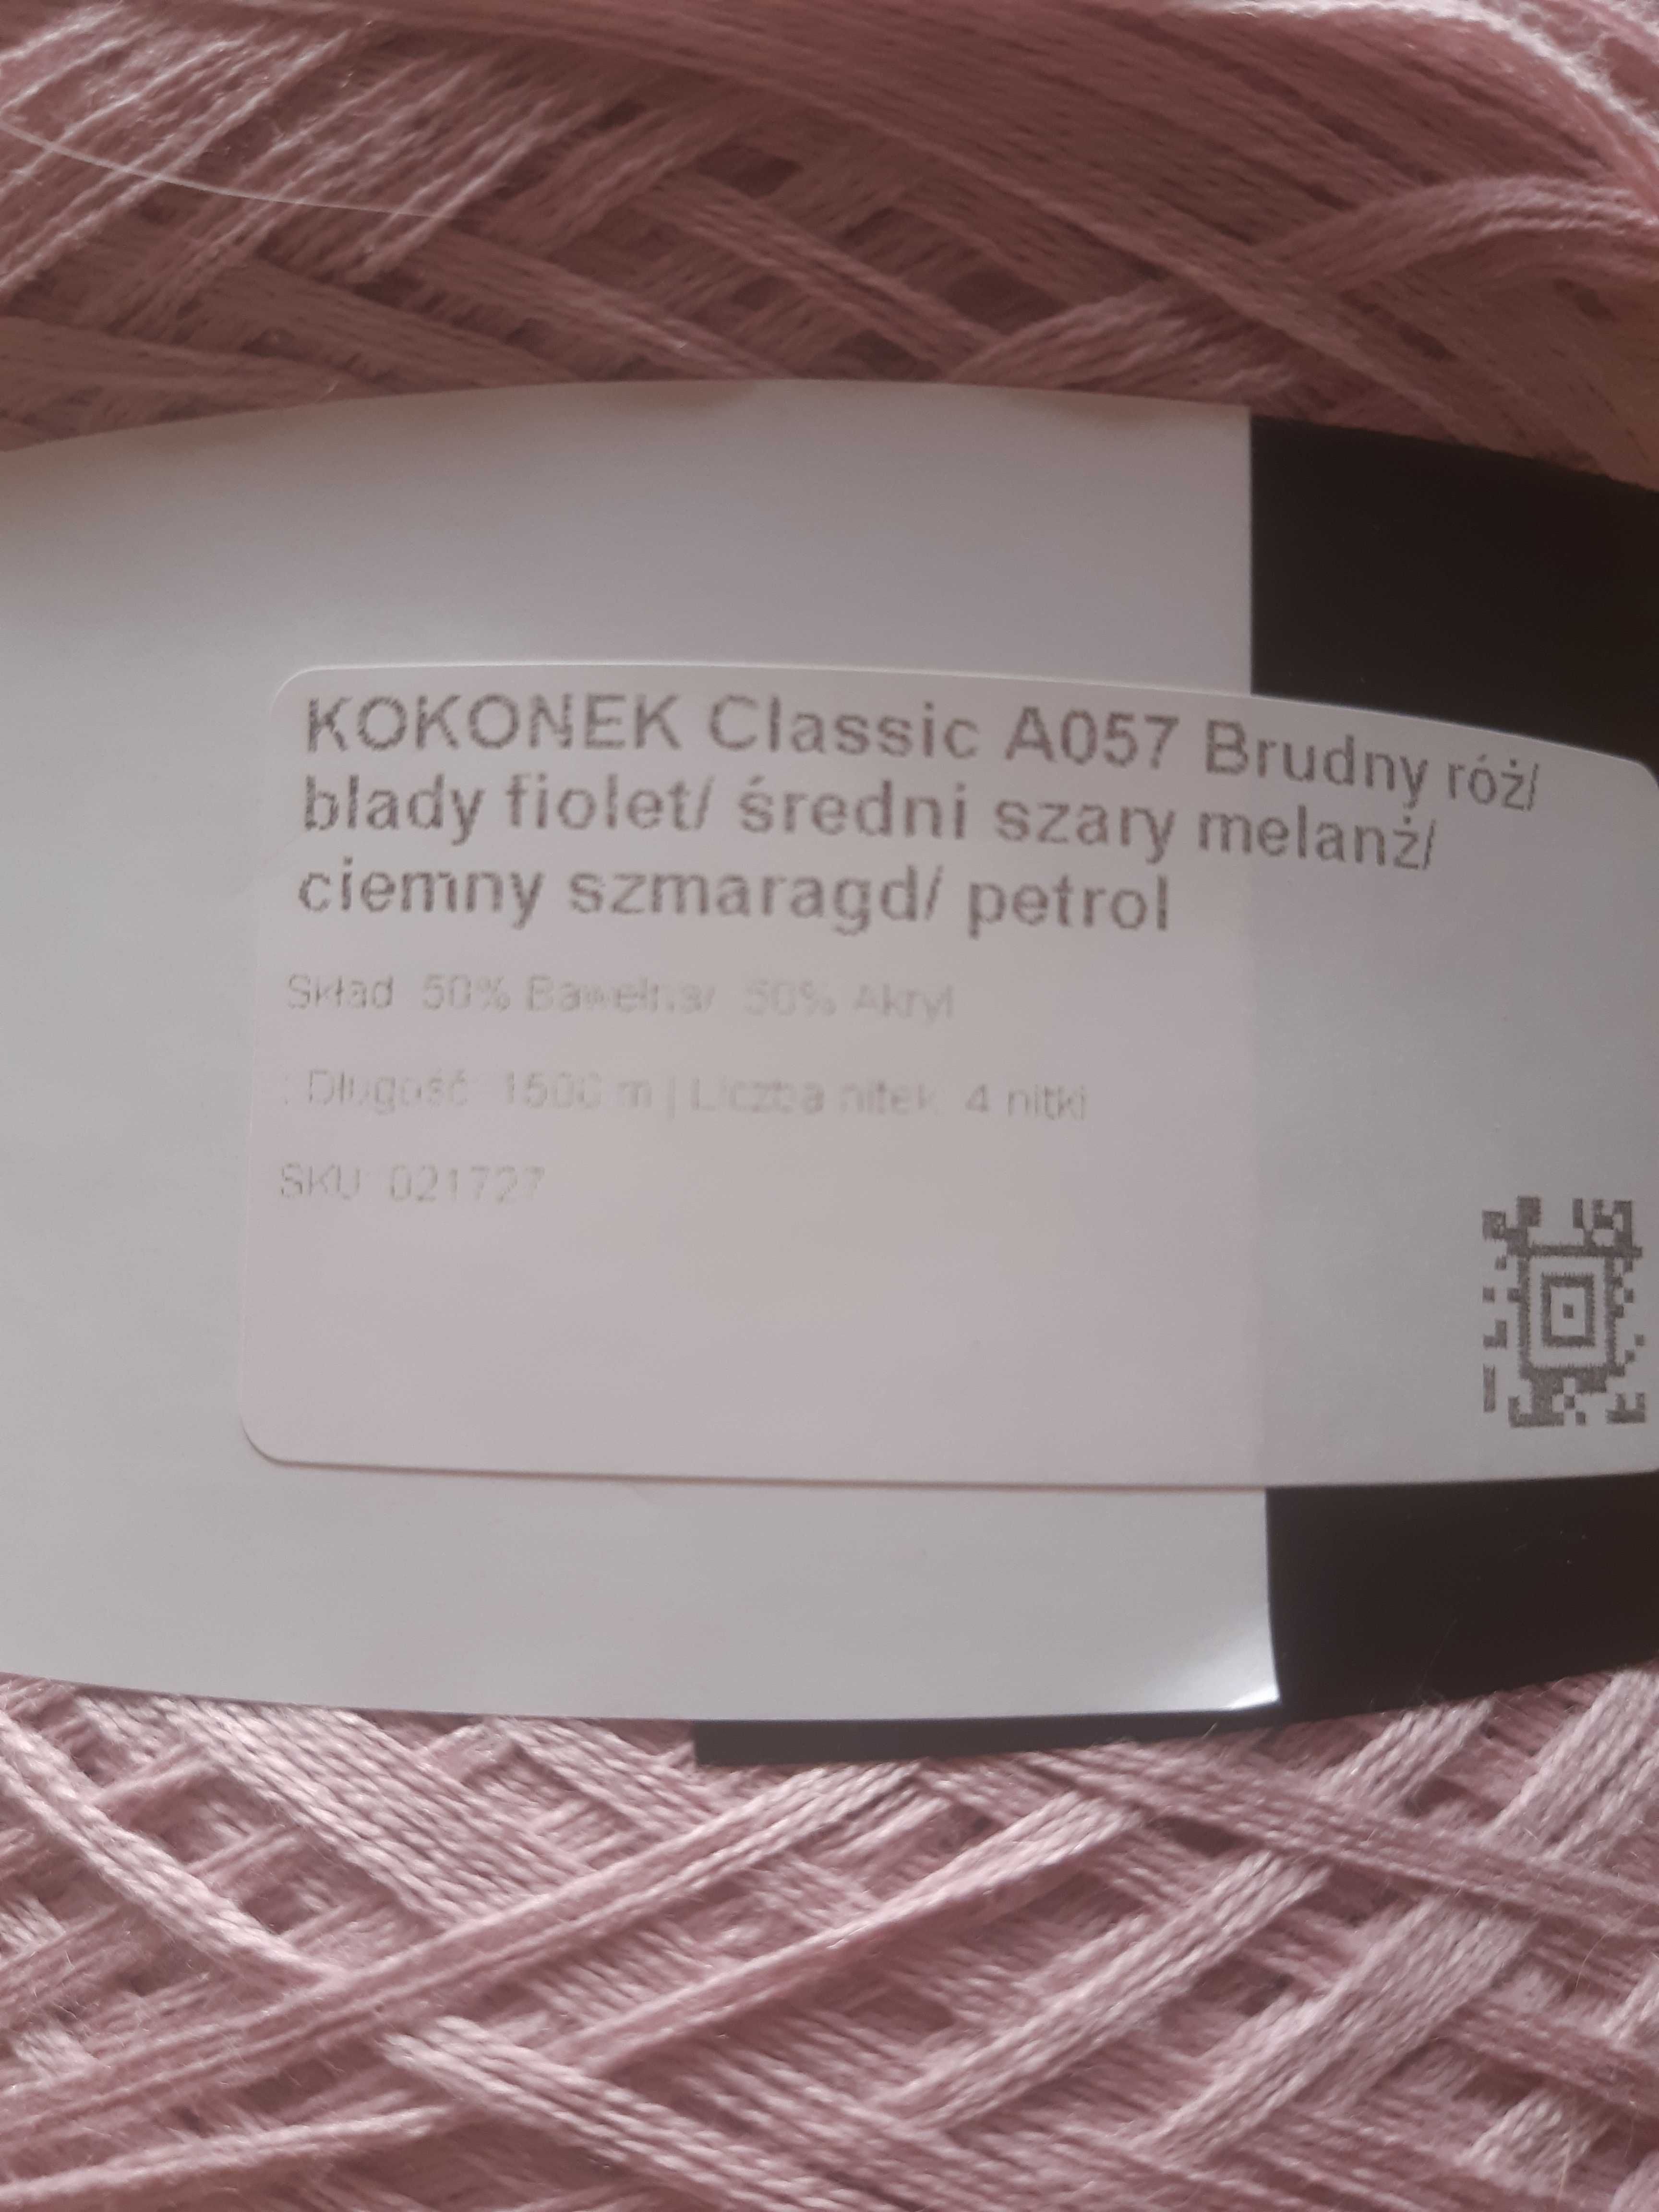 Kokonek Classic A057 4nitki/1500 m